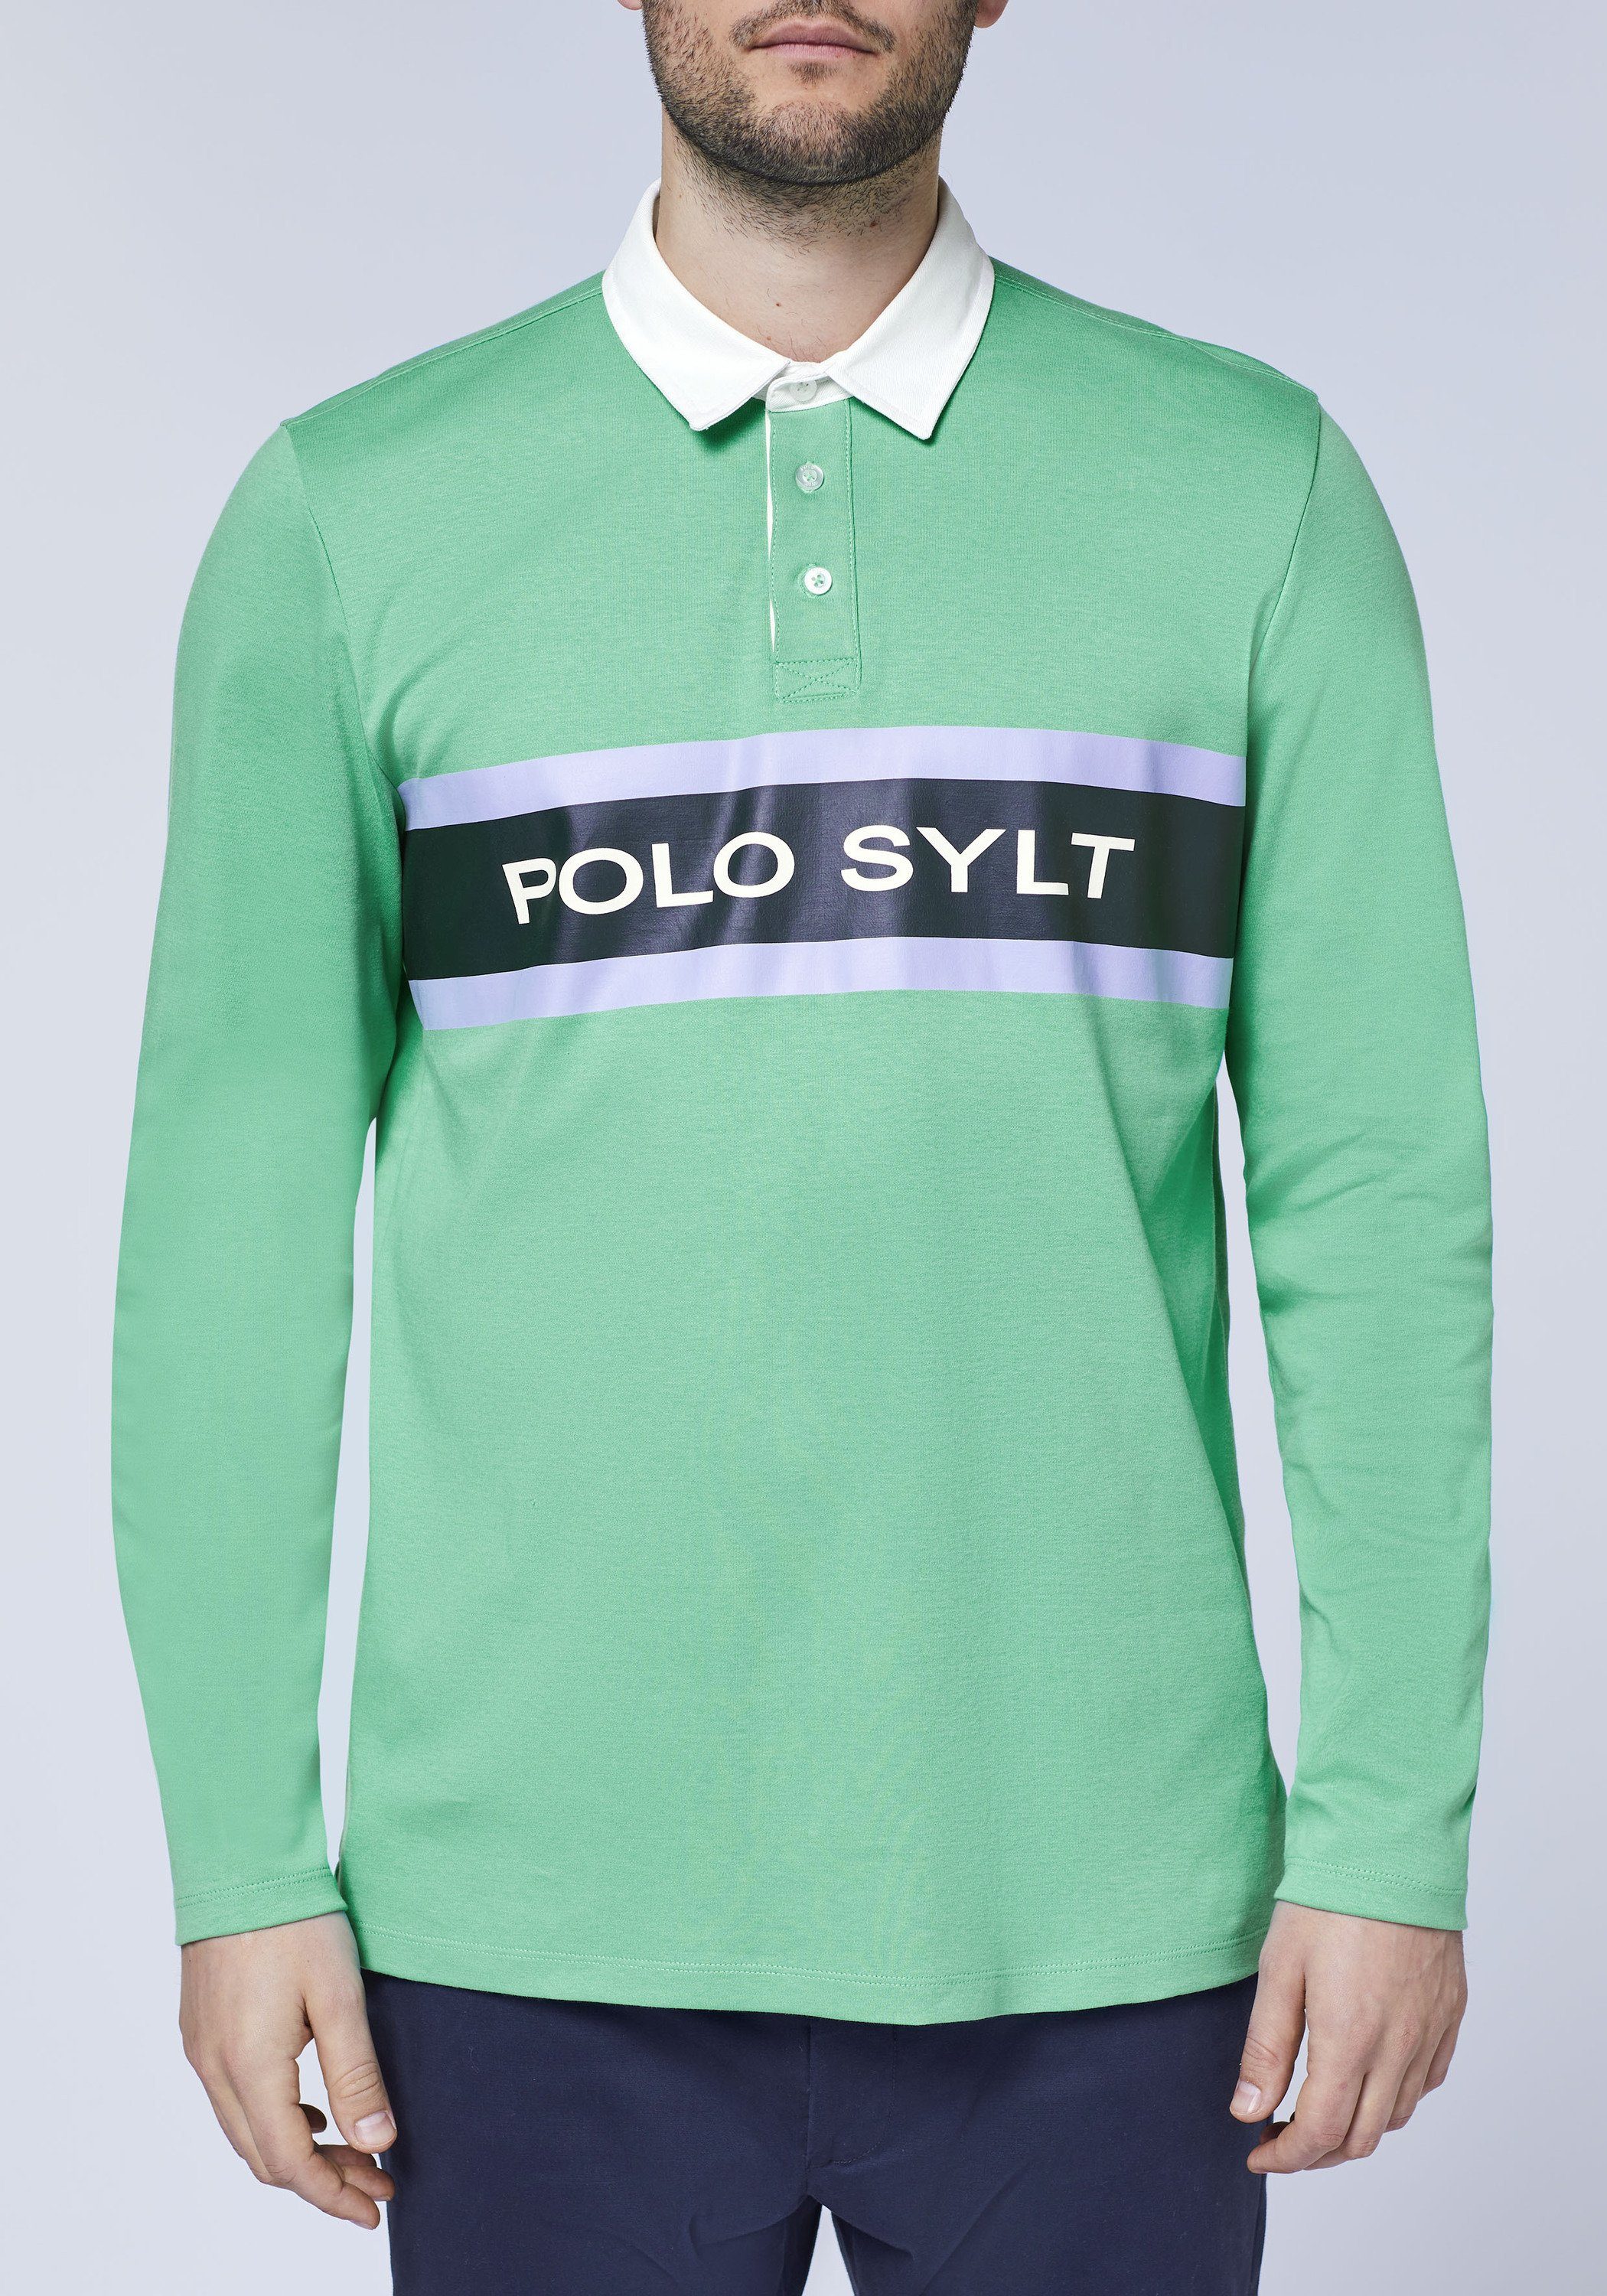 Polo Sylt Marine 16-5721 Poloshirt Green im Label-Design